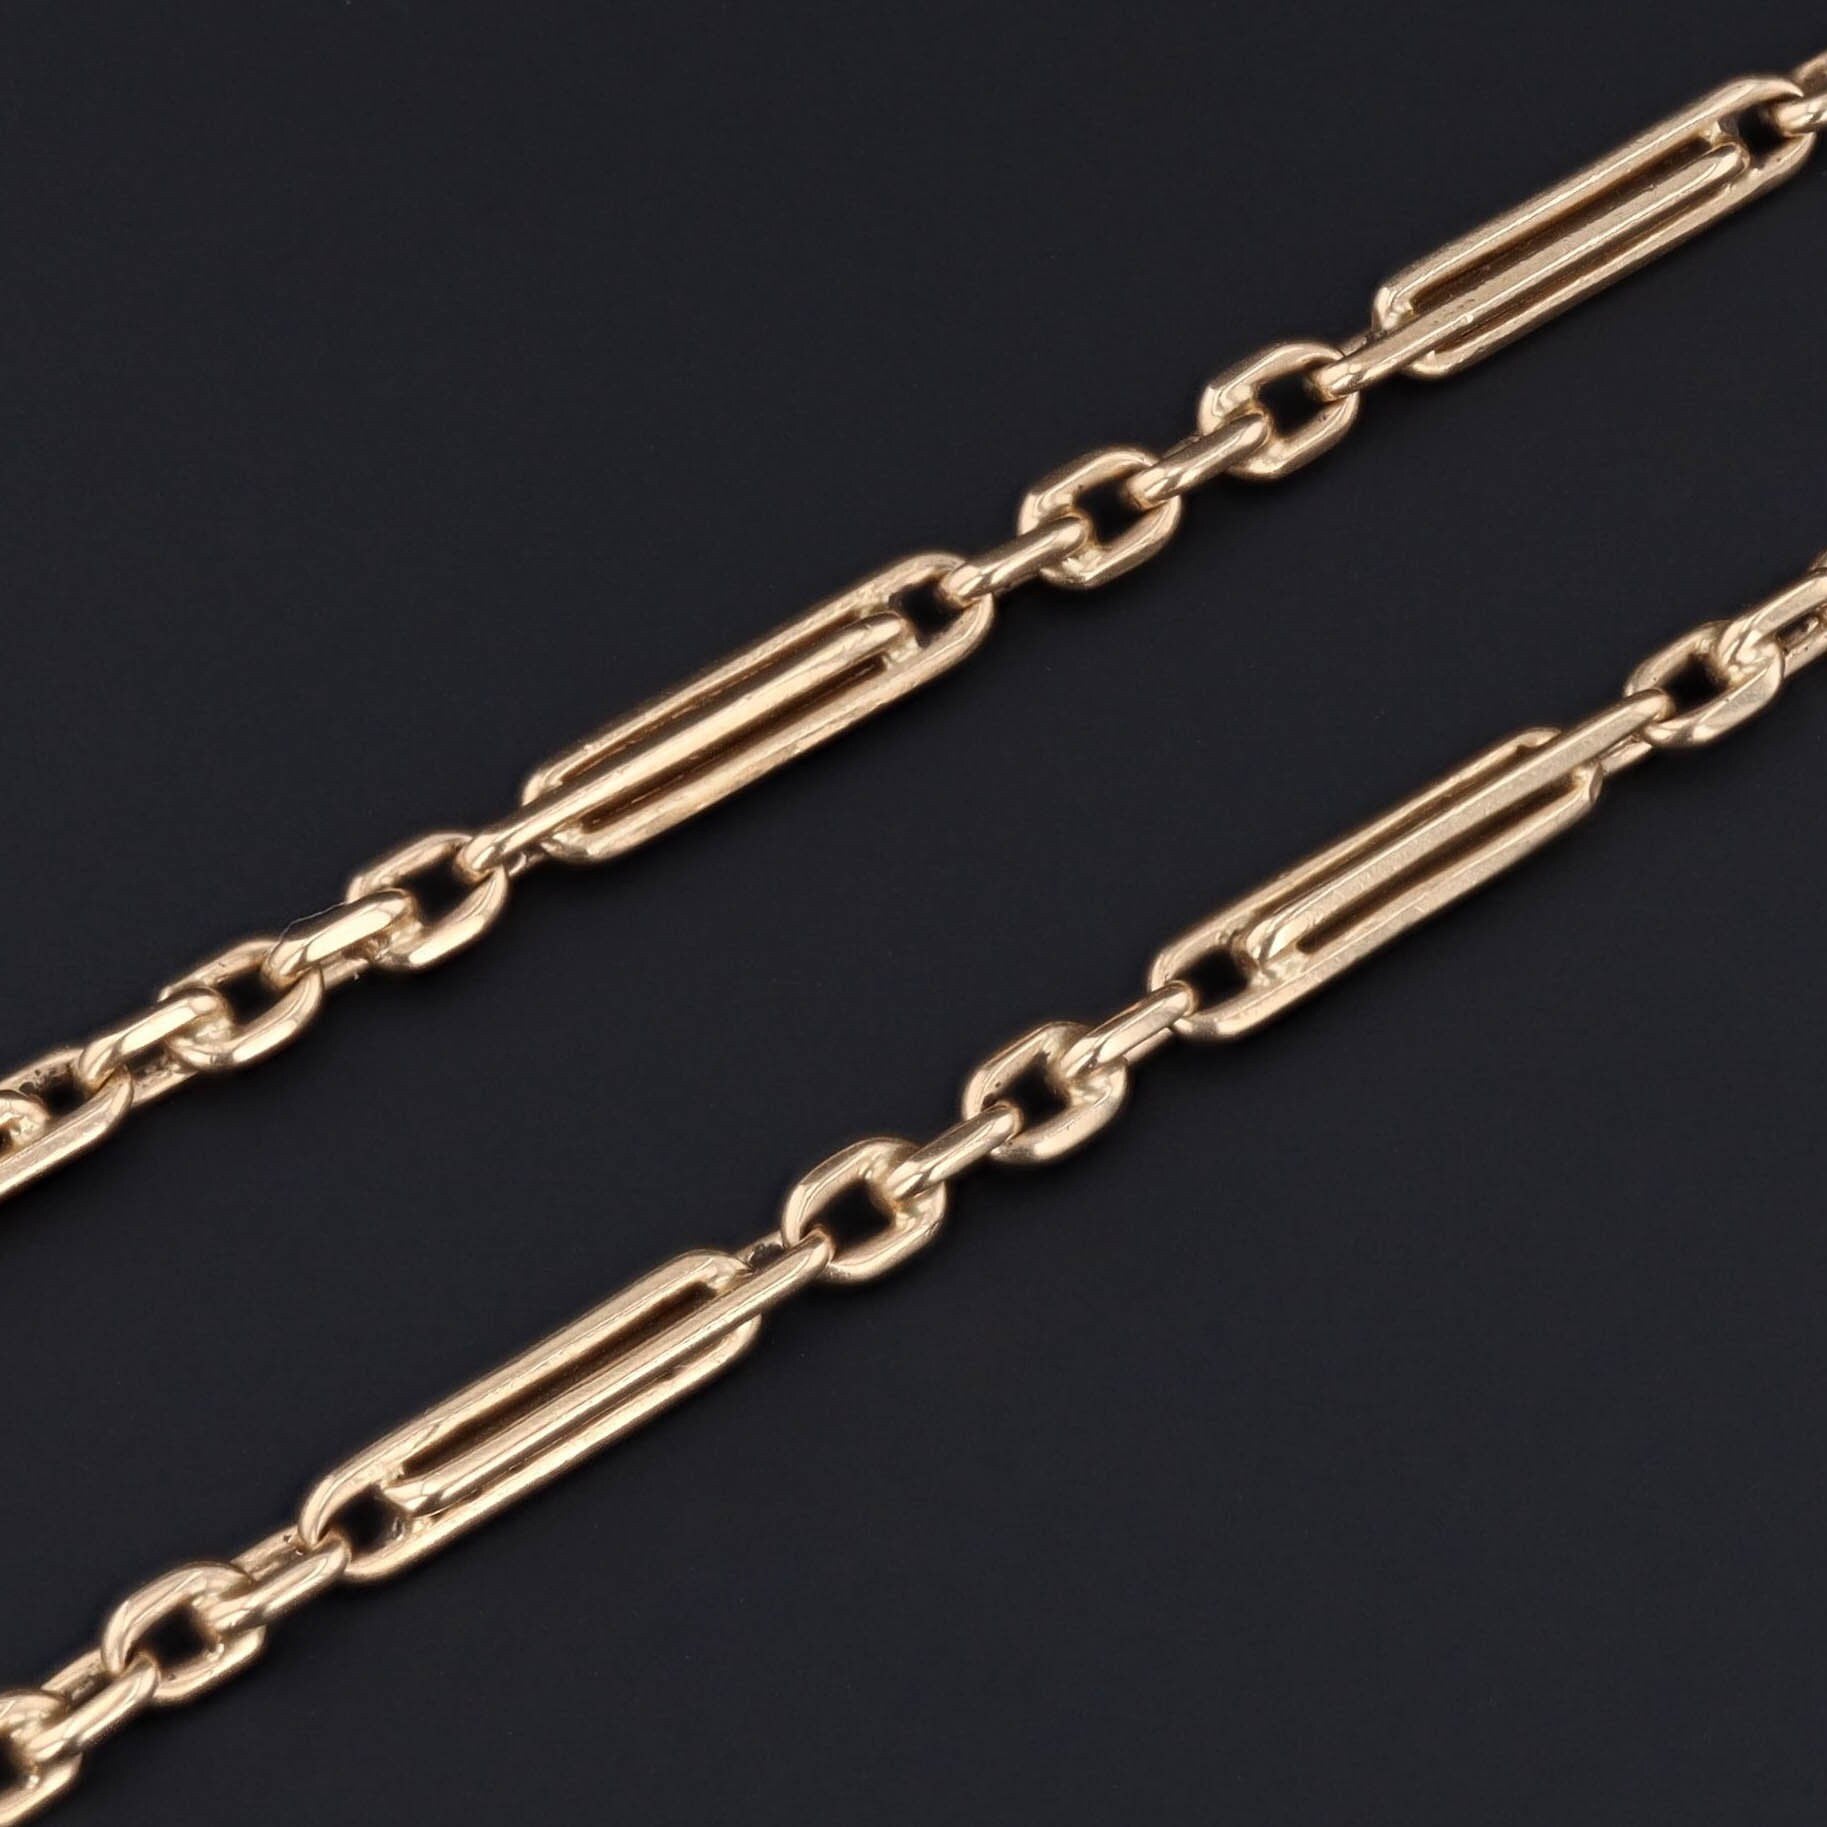 Antique Watch Chain Necklace | 14k Gold Watch Chain 